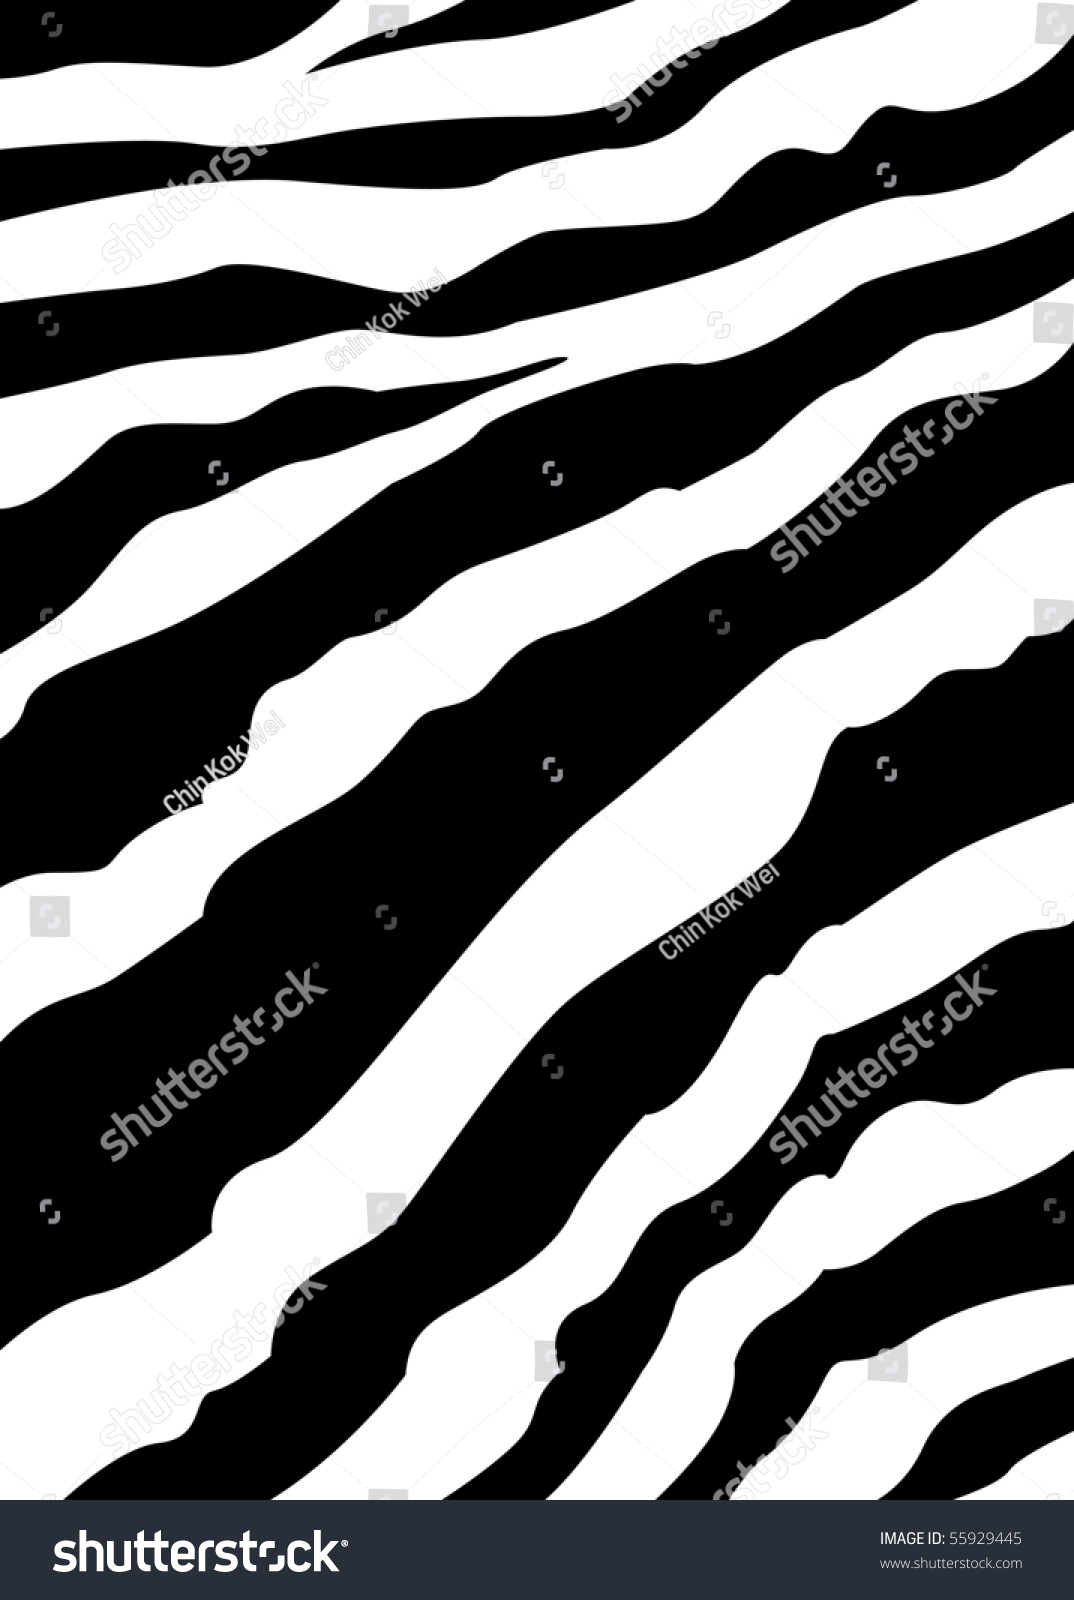 Zebra Lines Stock Photo 55929445 : Shutterstock